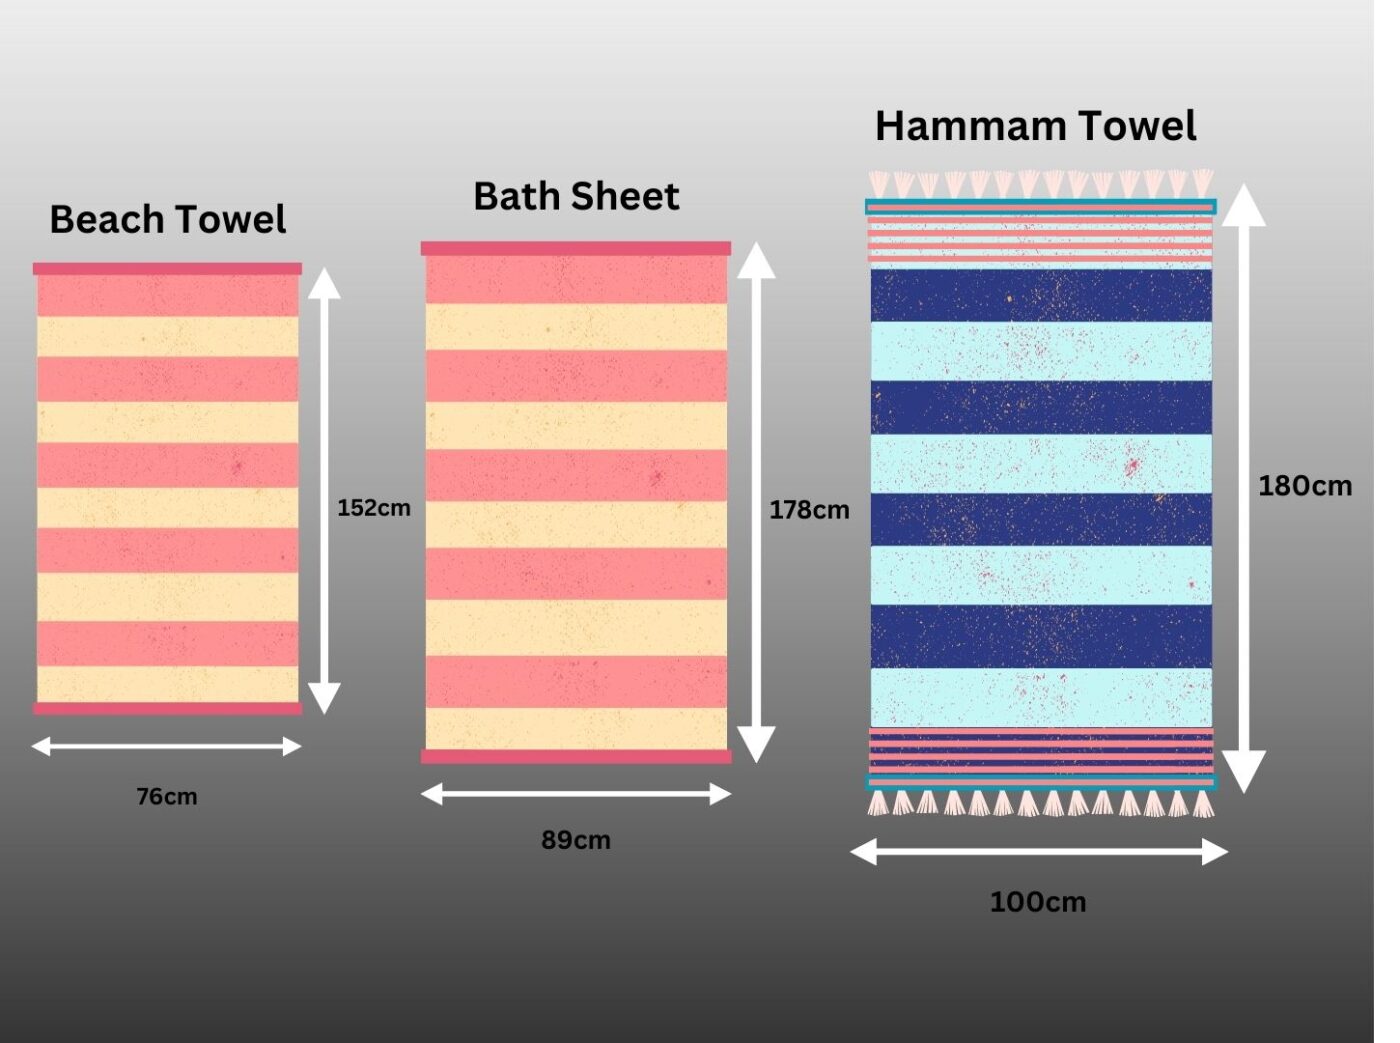 https://hforhammam.co.uk/wp-content/uploads/2023/04/Beach-Towel-vs-Bath-Sheet-vs-Hammam-Towel-1400x1043.jpg